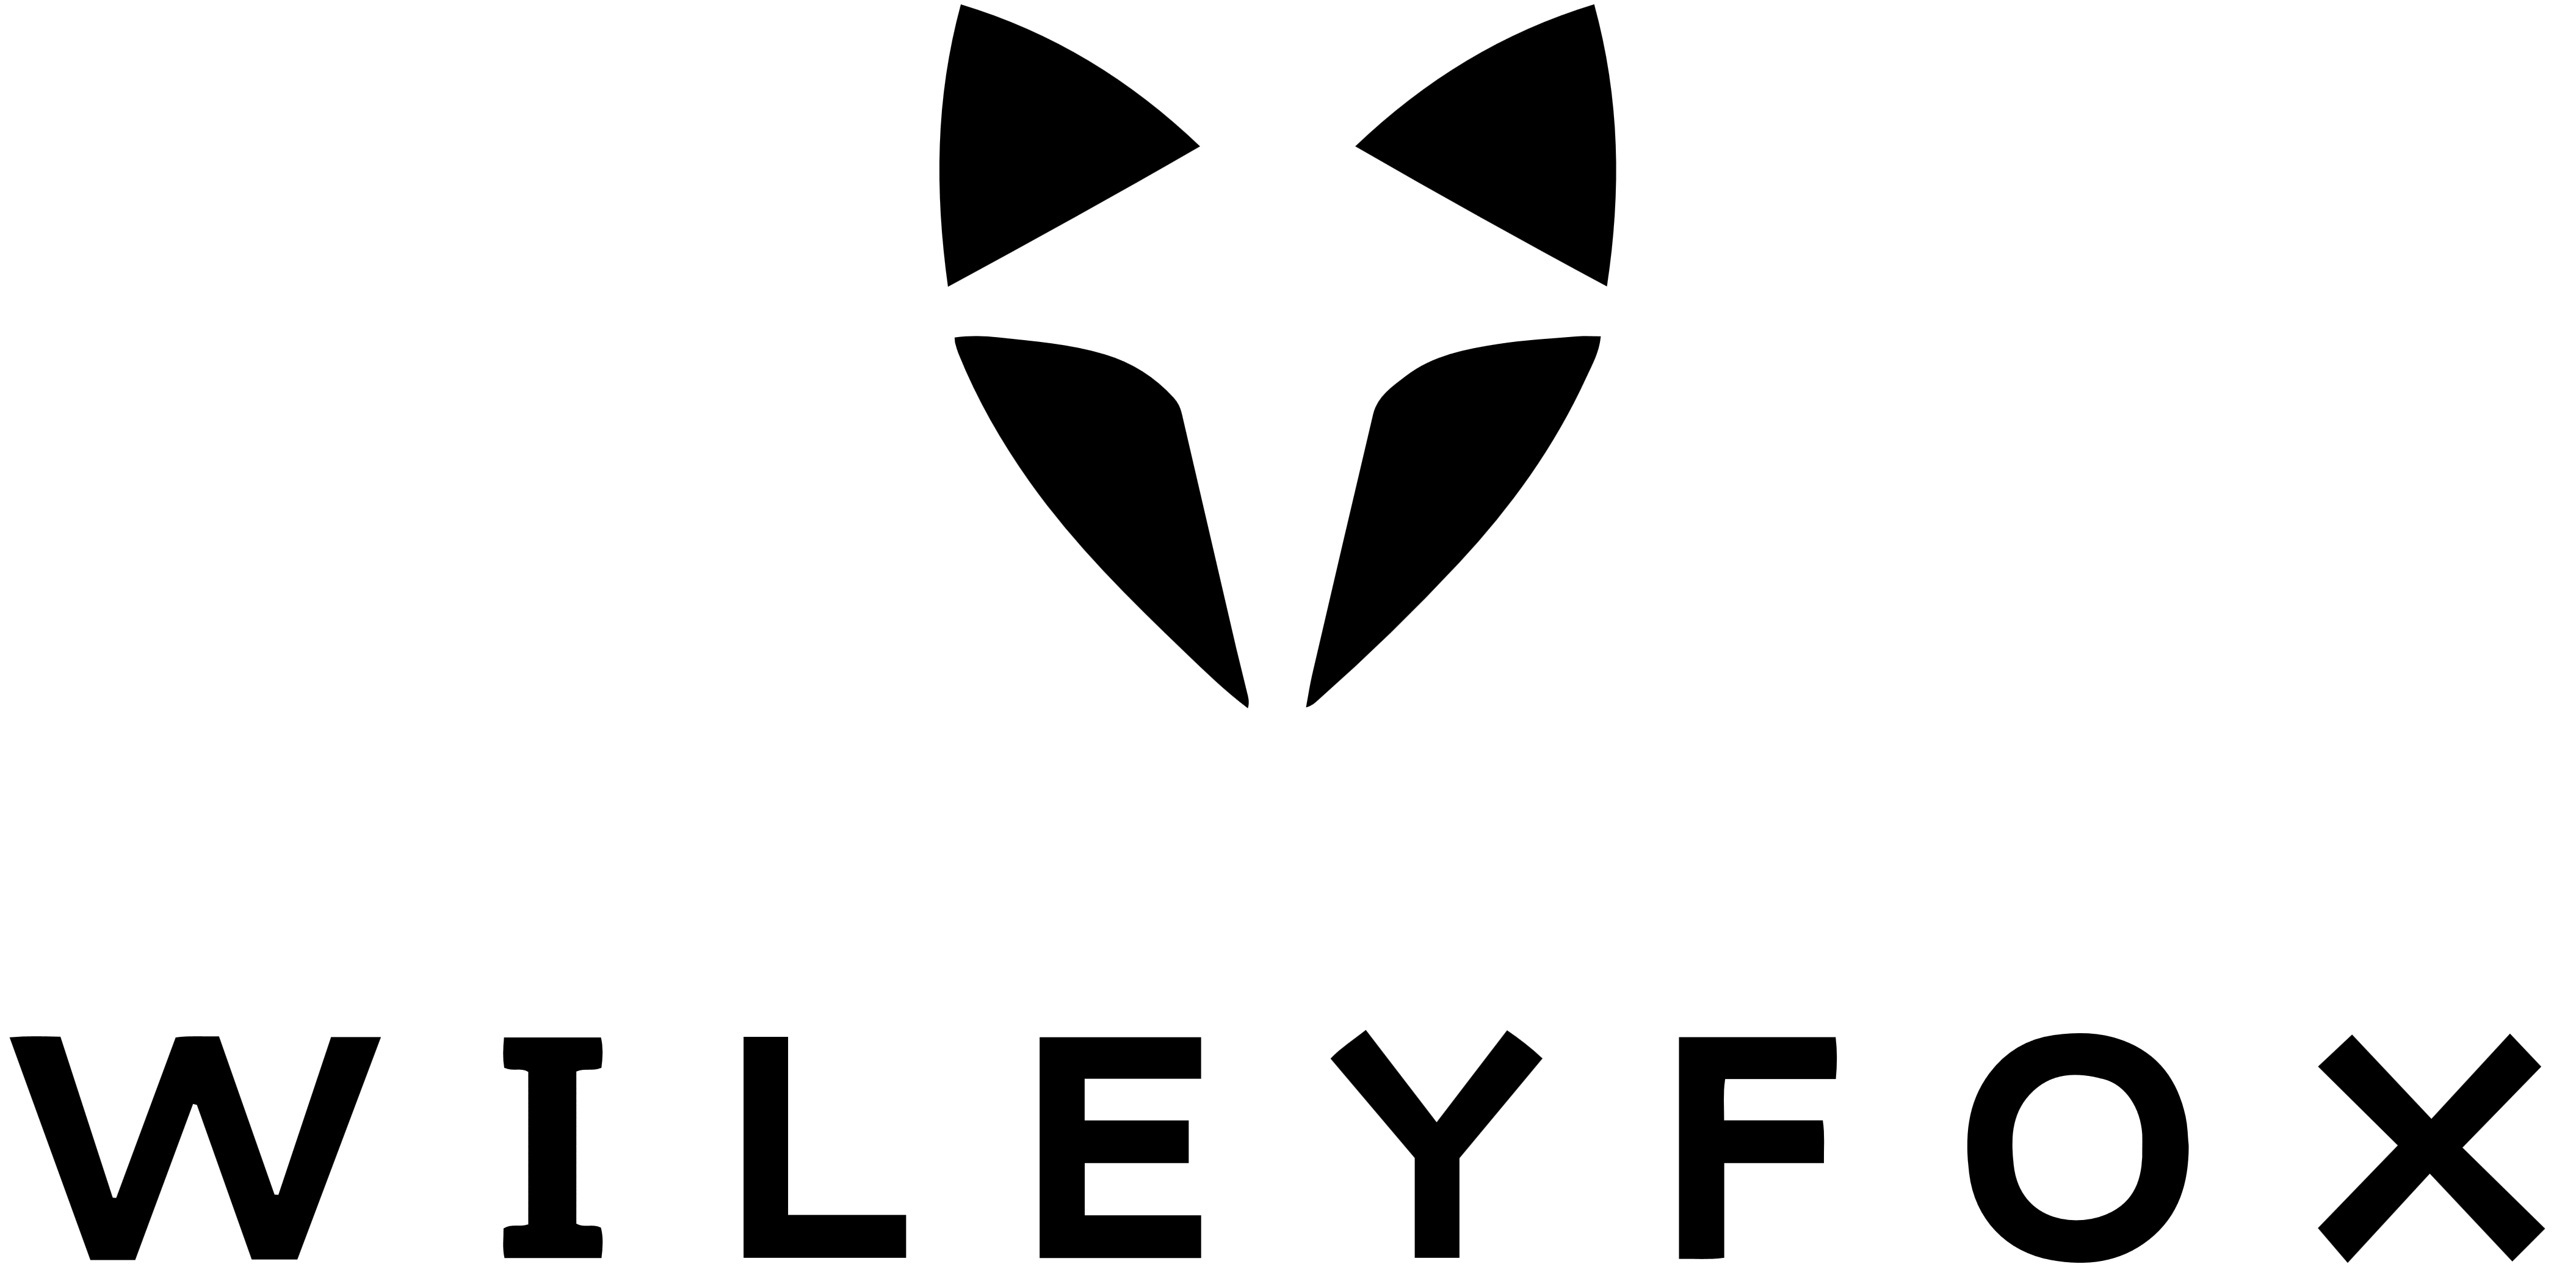 Wileyfox logo, logotype